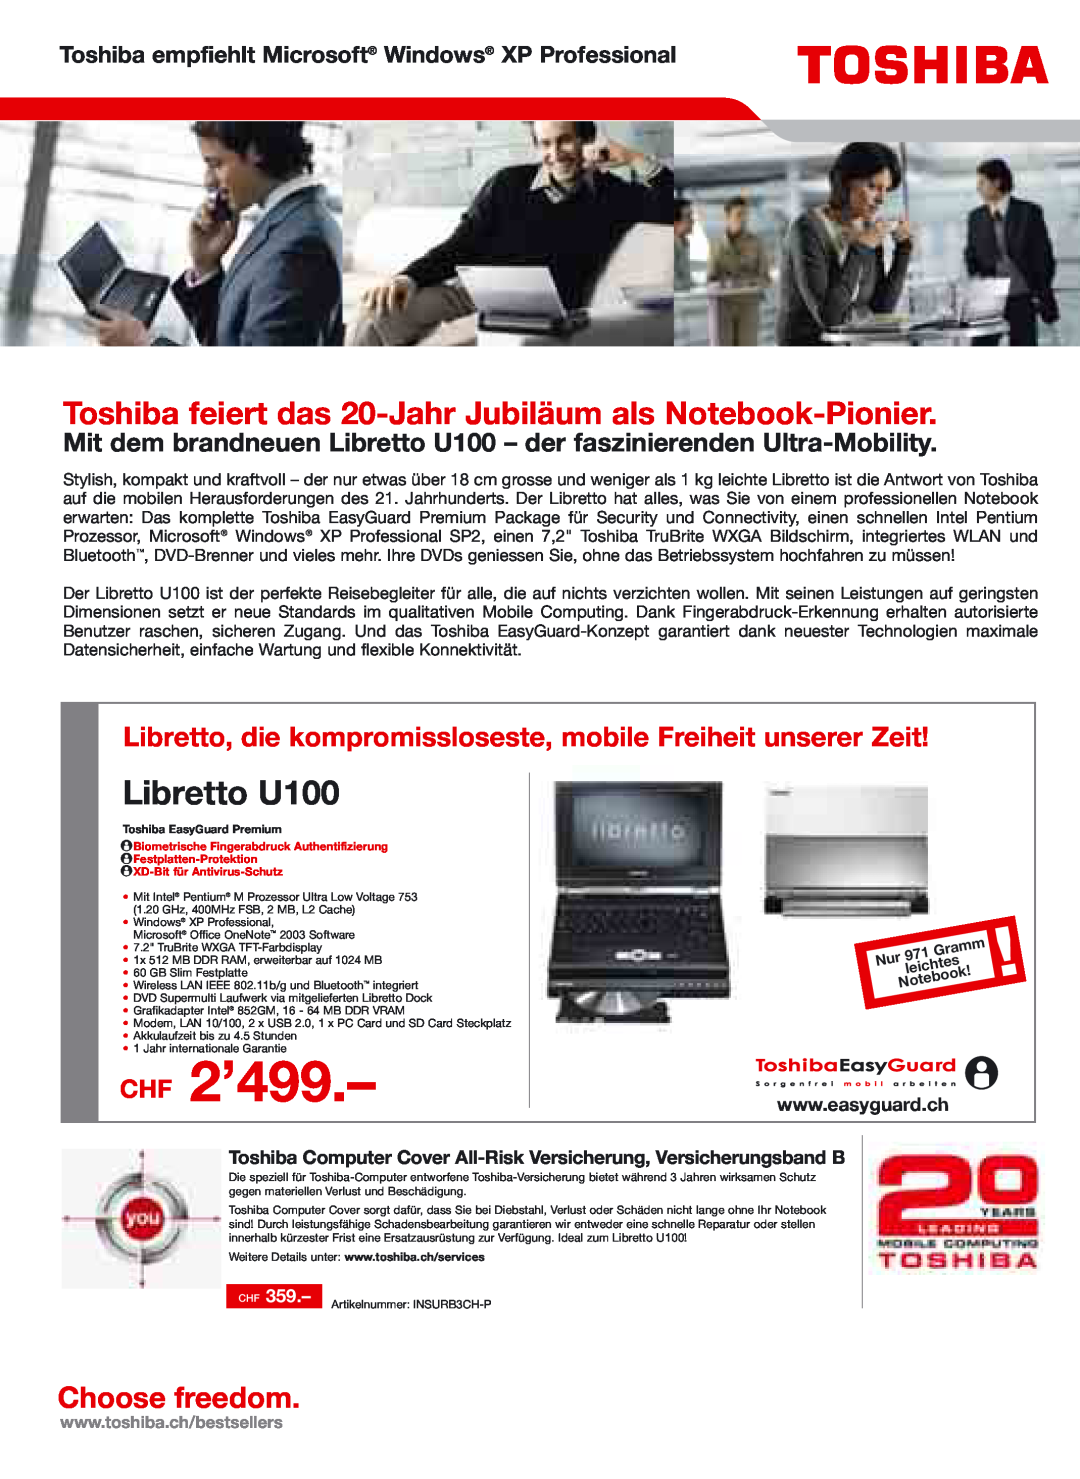 Toshiba Portg R200 CHF 2’499, Libretto U100, Toshiba feiert das 20-Jahr Jubiläum als Notebook-Pionier, Choose freedom 